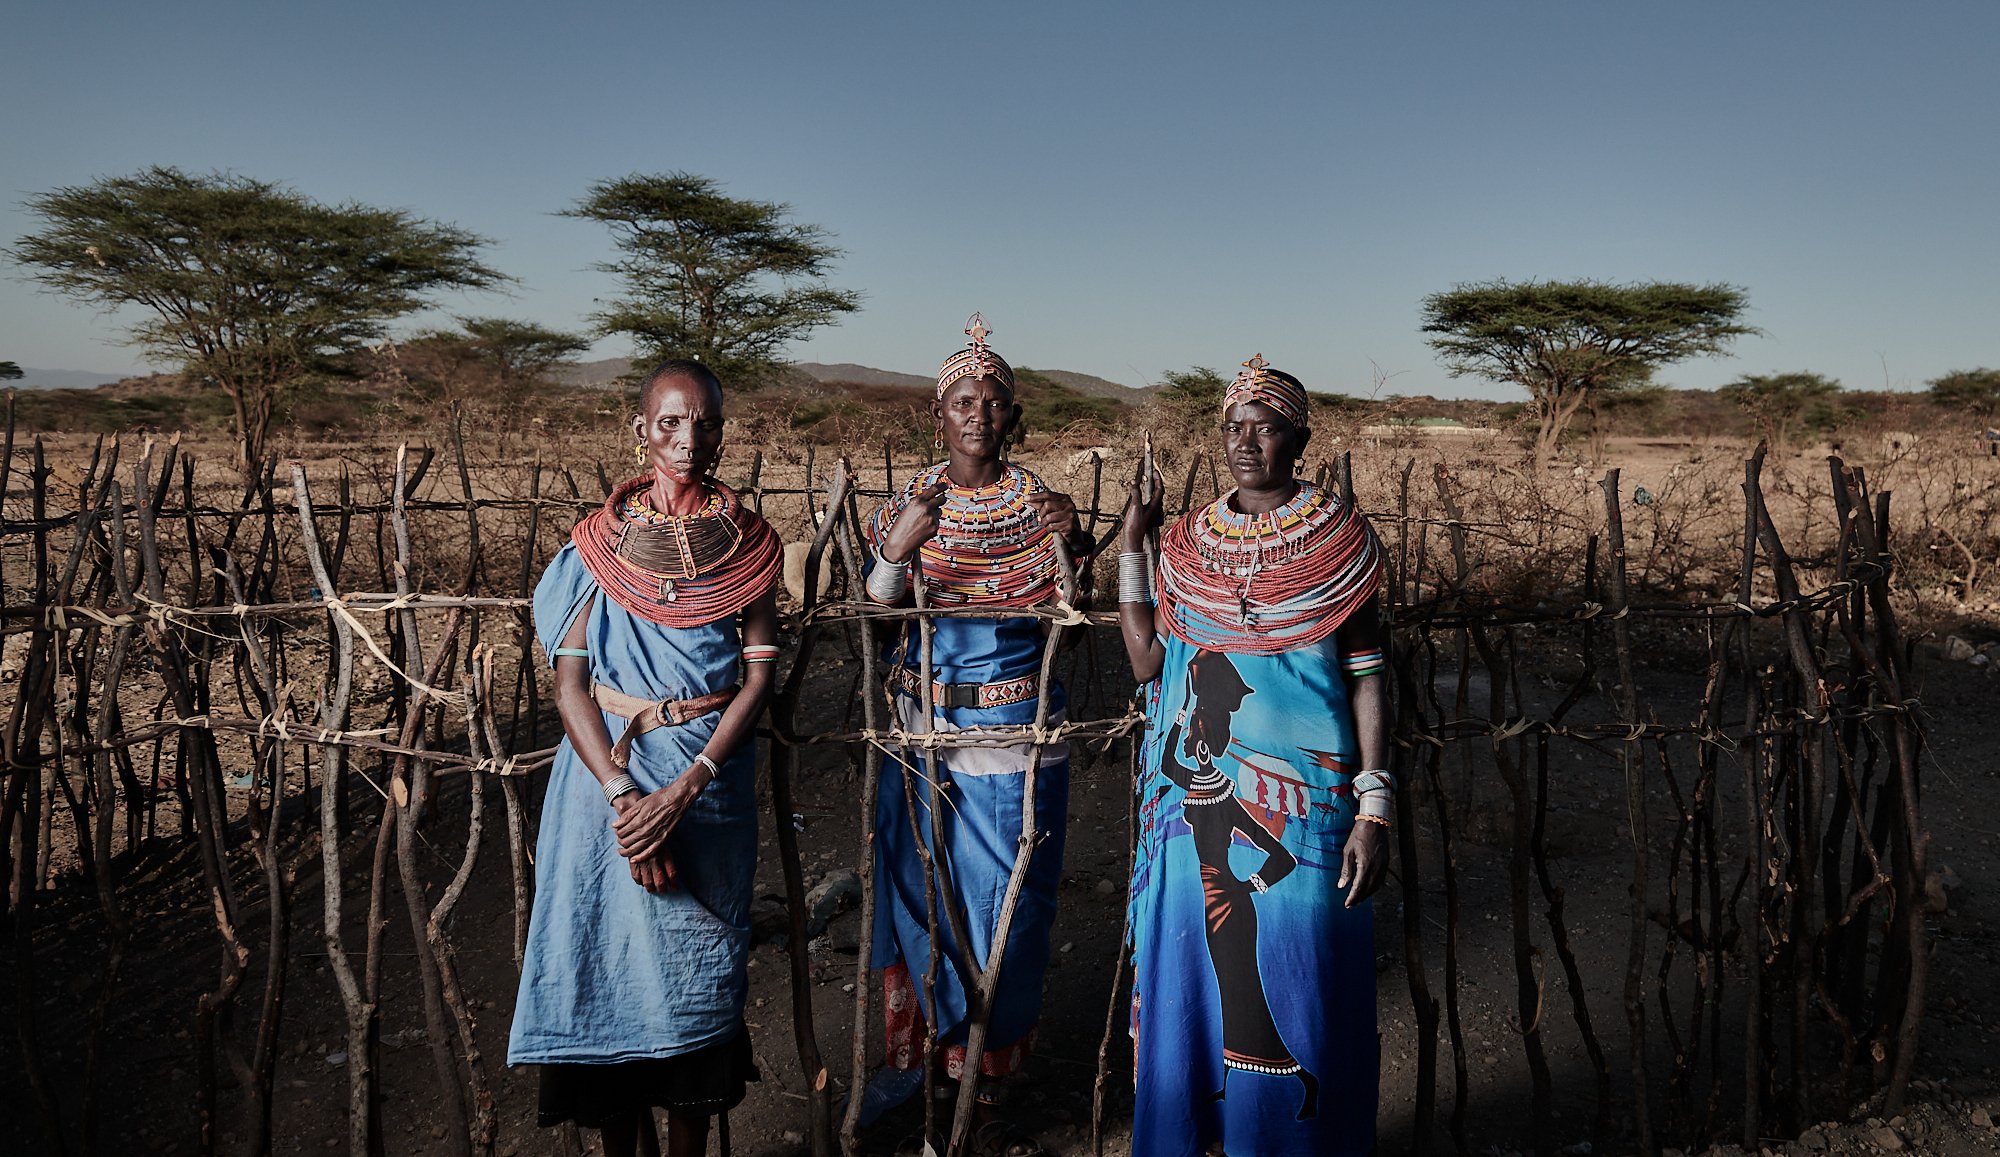 Women of the Samburu tribe around a small goat pen